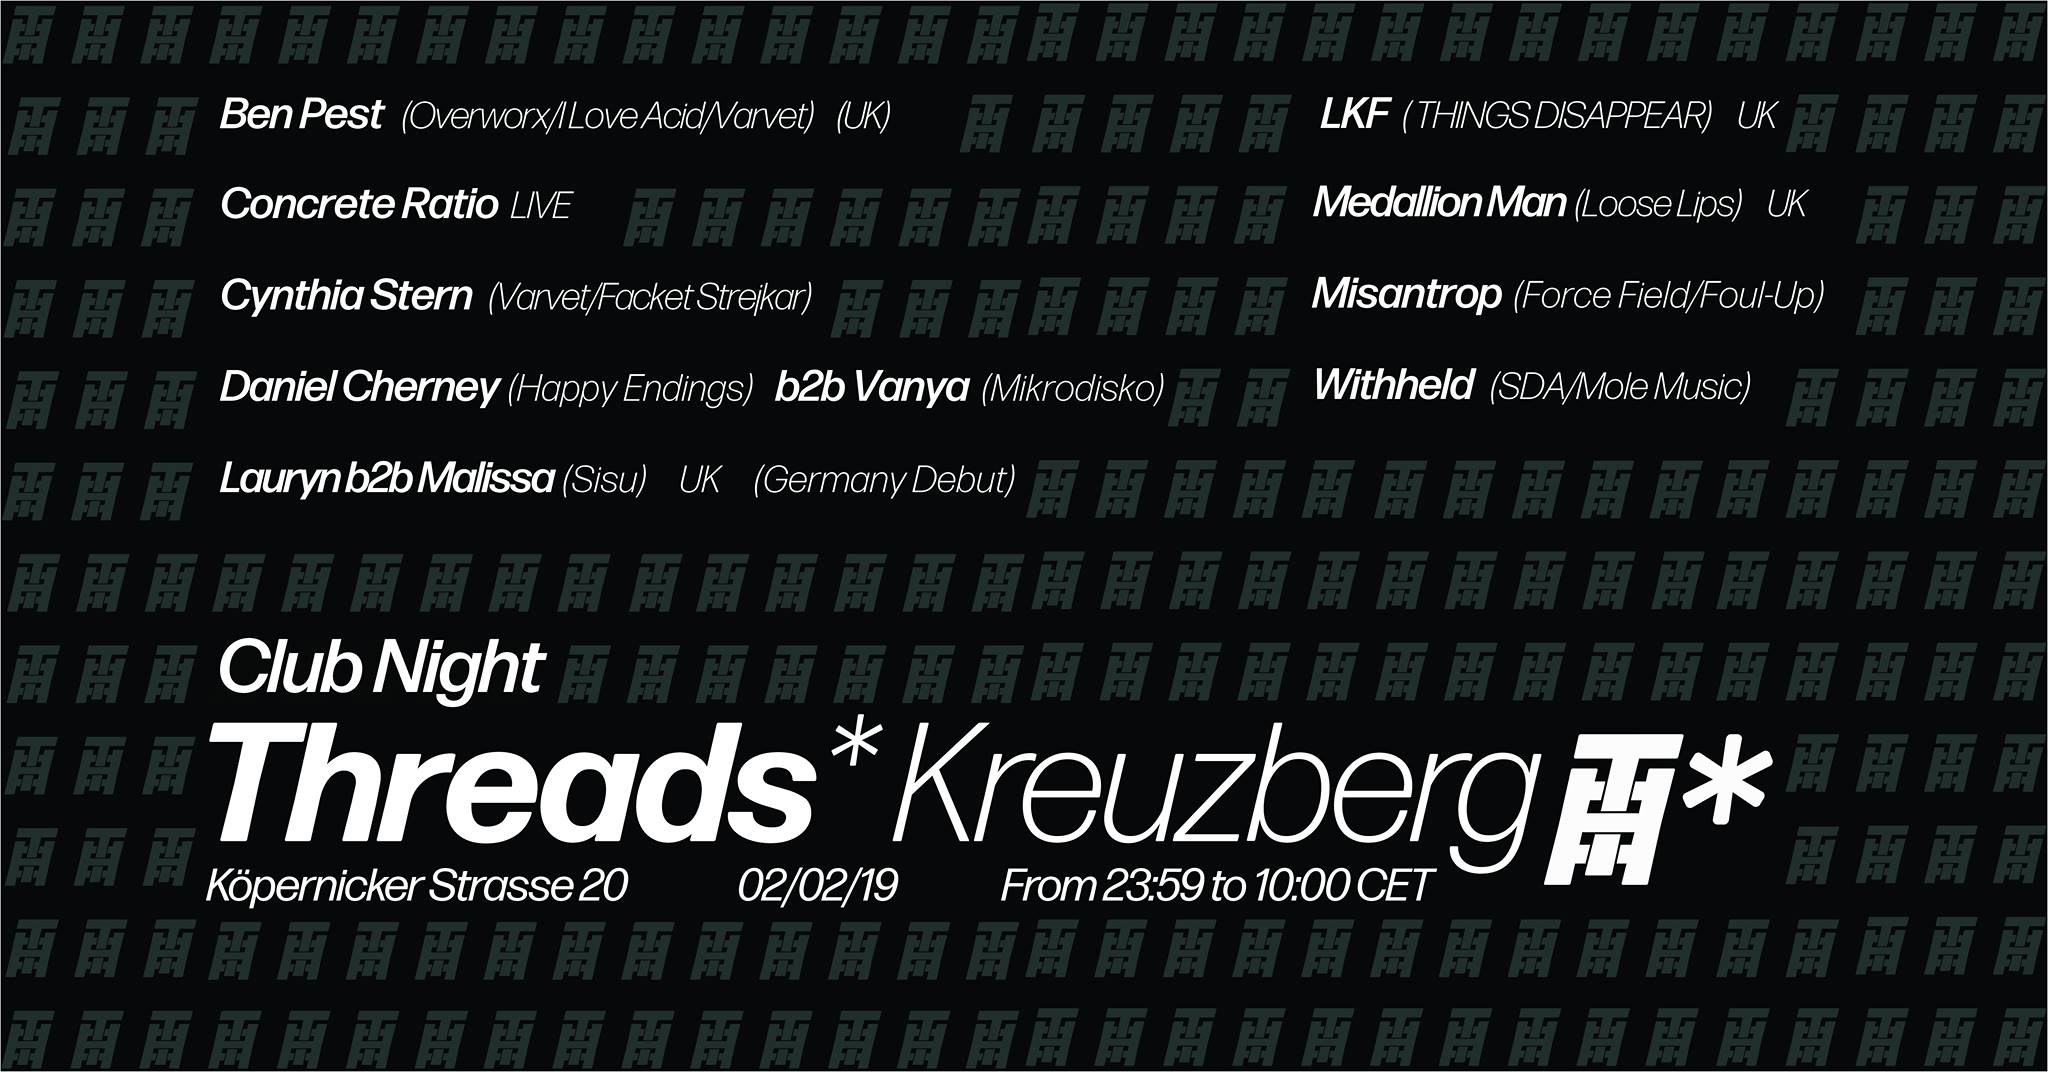 Threads*Kreuzberg Pop Up – Club Night (02/02/19)